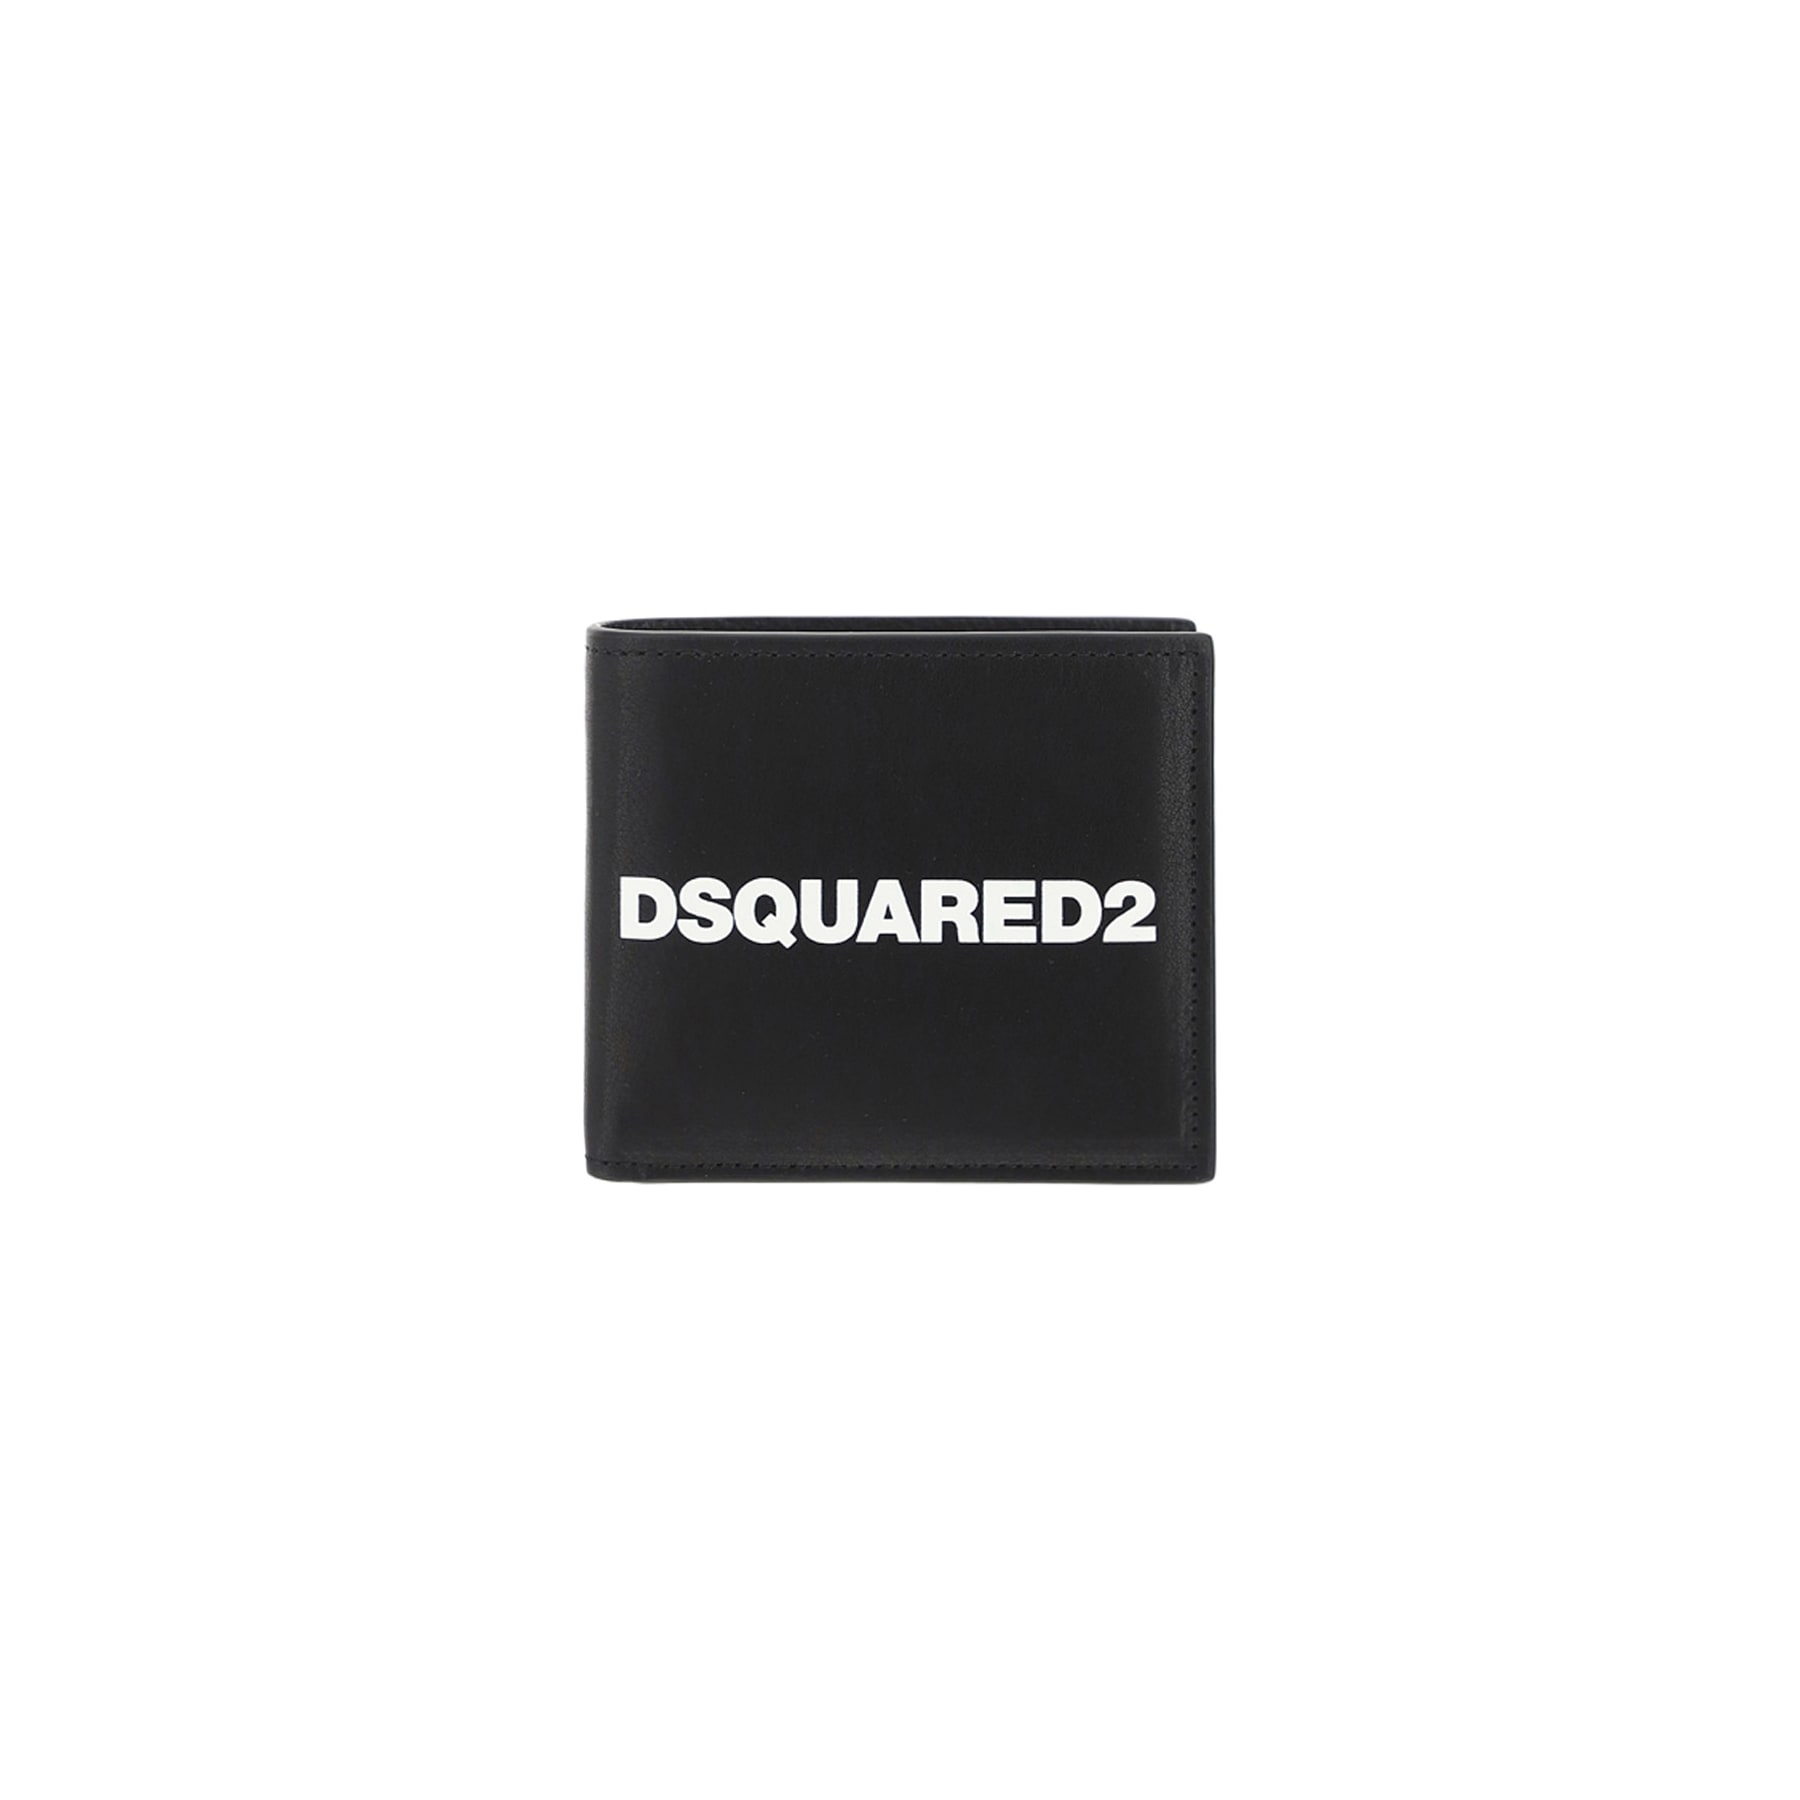 Dsquared2 Wallet | ALWAYS LIKE A SALE